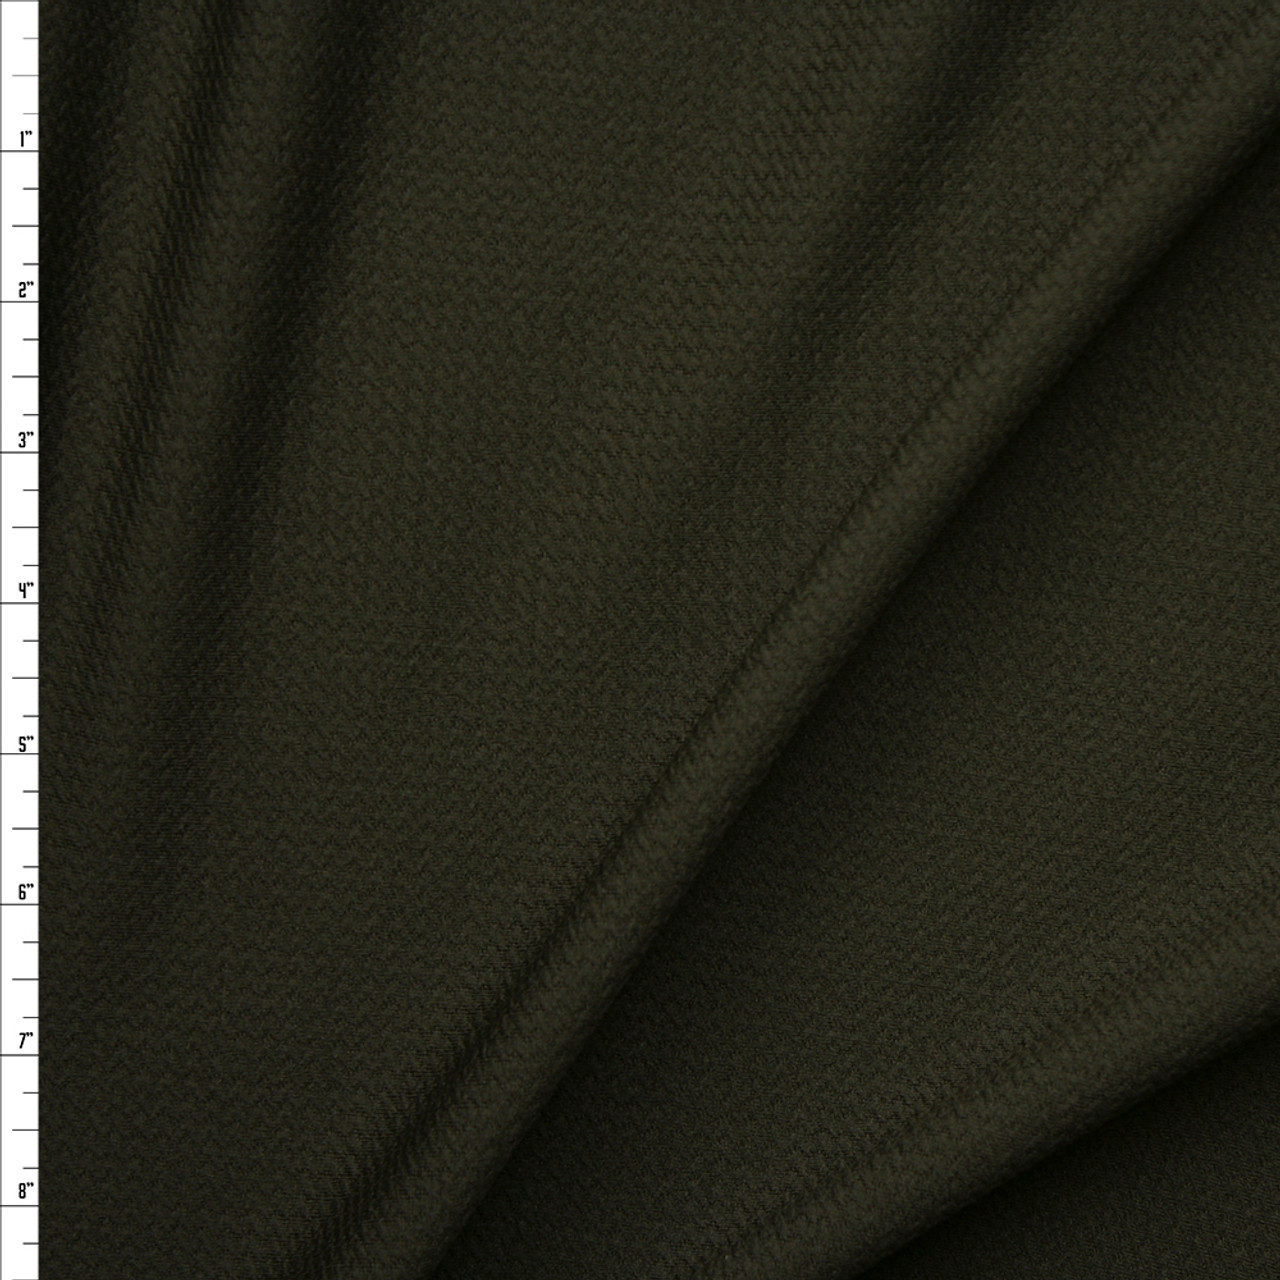 Olive Green Cotton Lycra Knit Solid Essentials